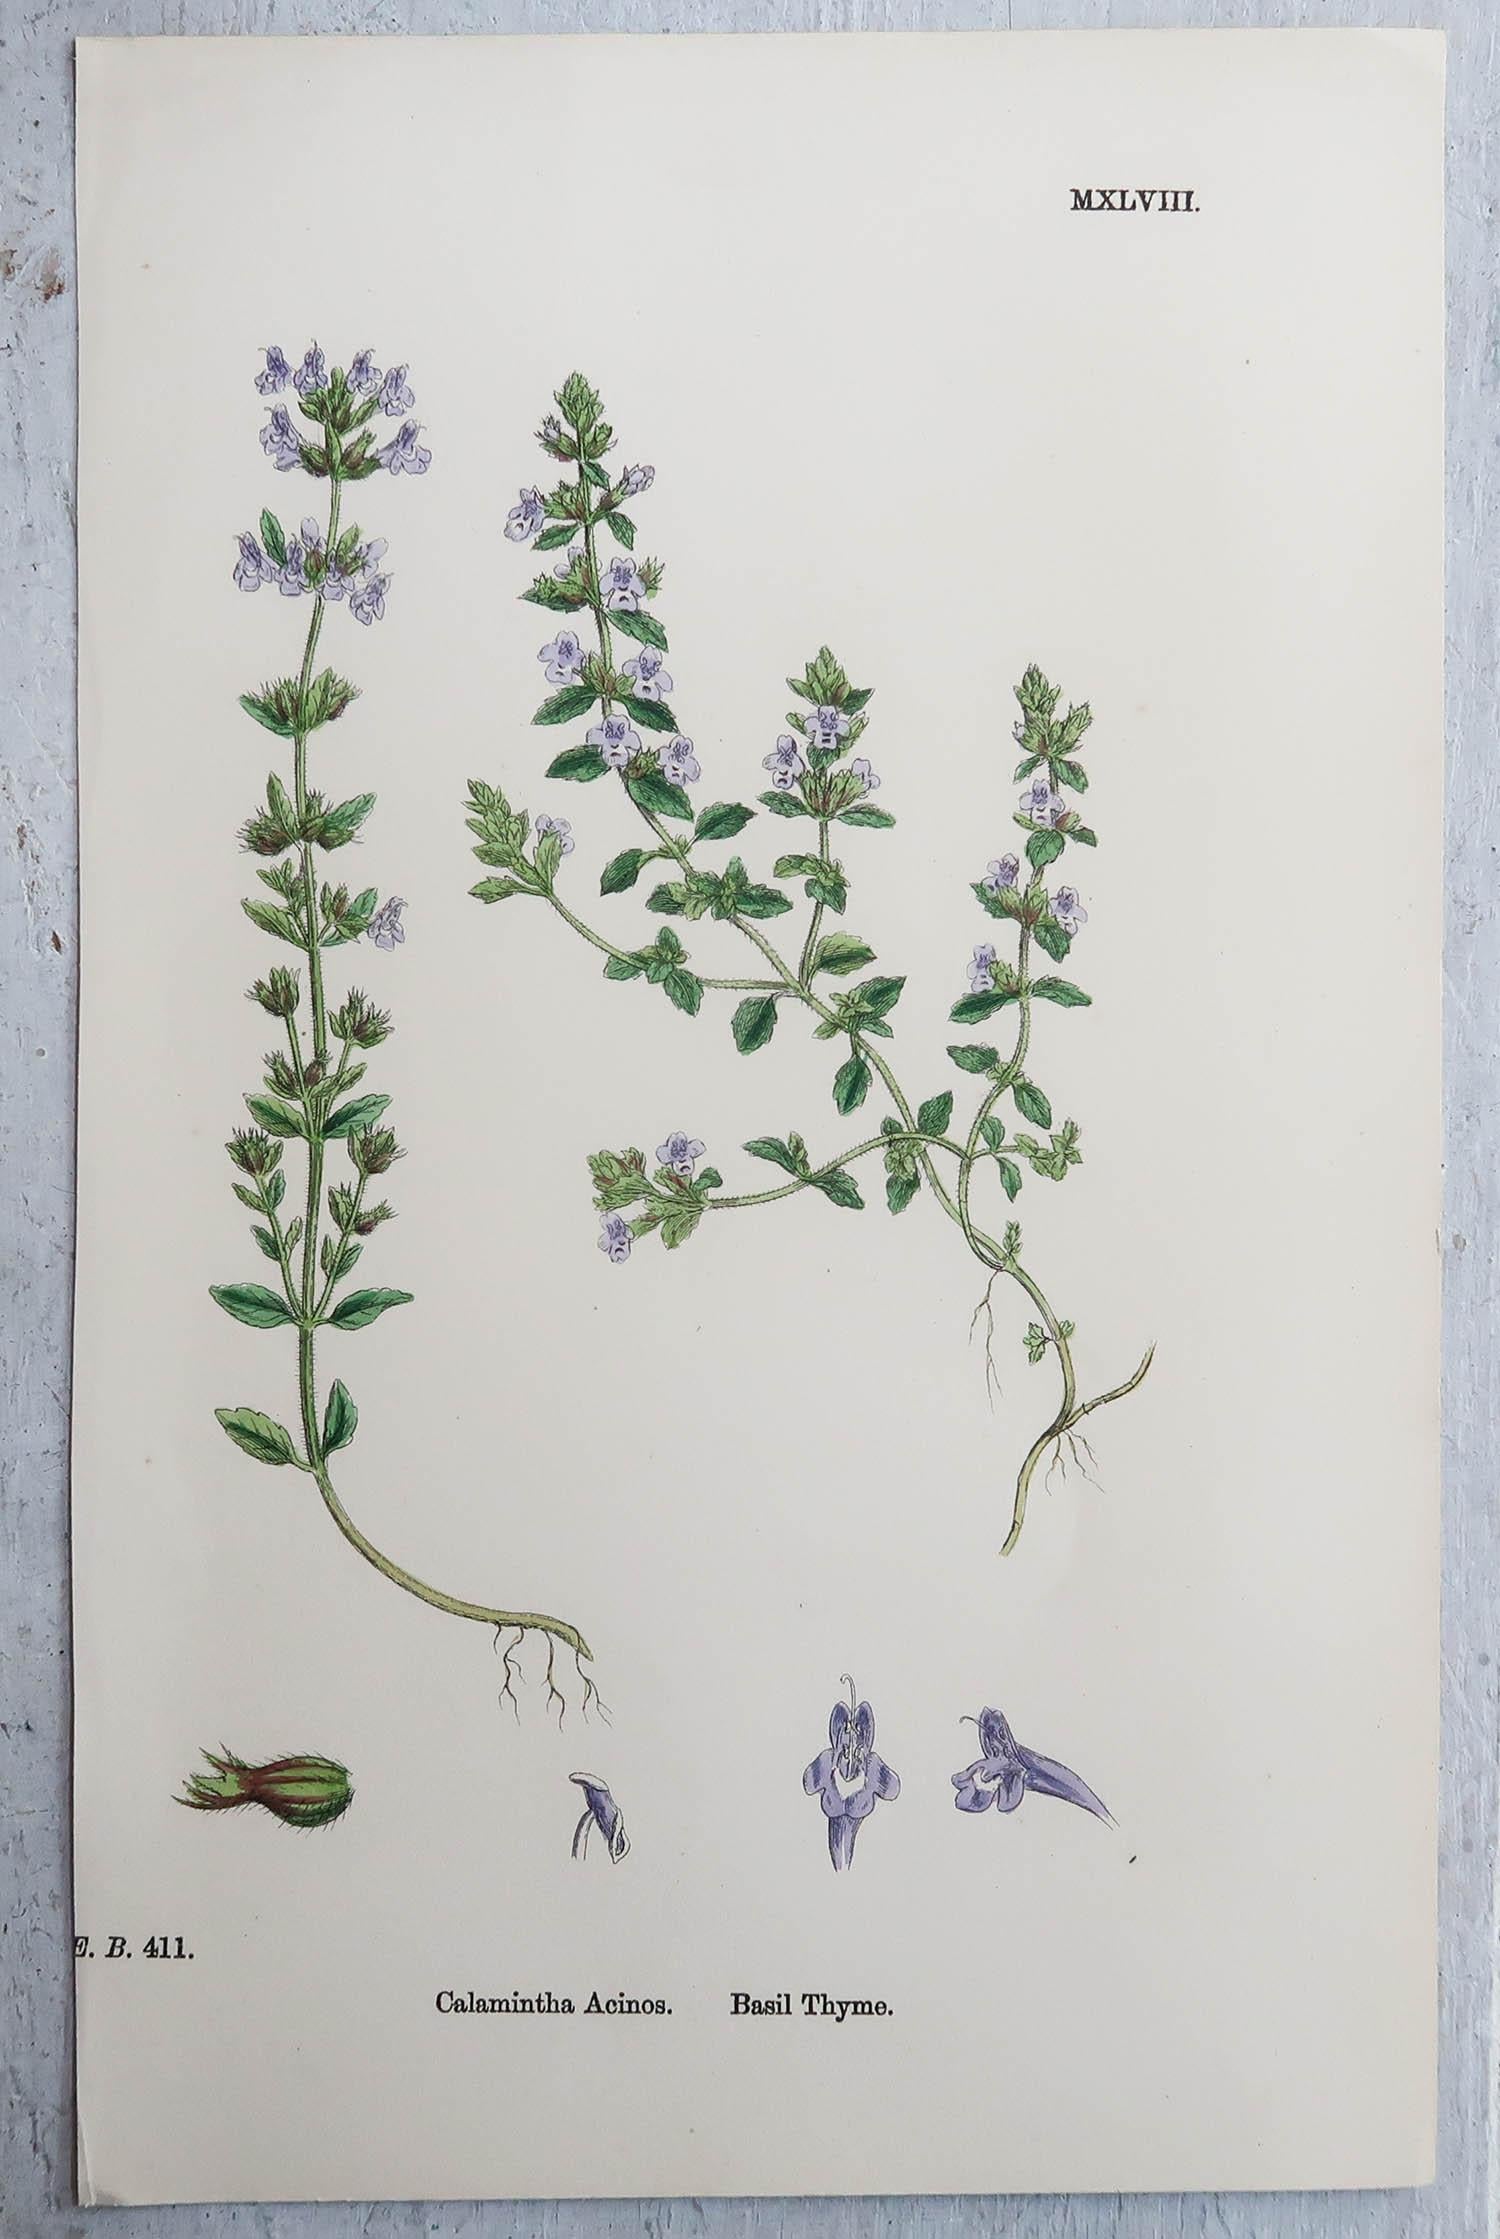 English Set of 6 Original Antique Prints of Herbs, circa 1850